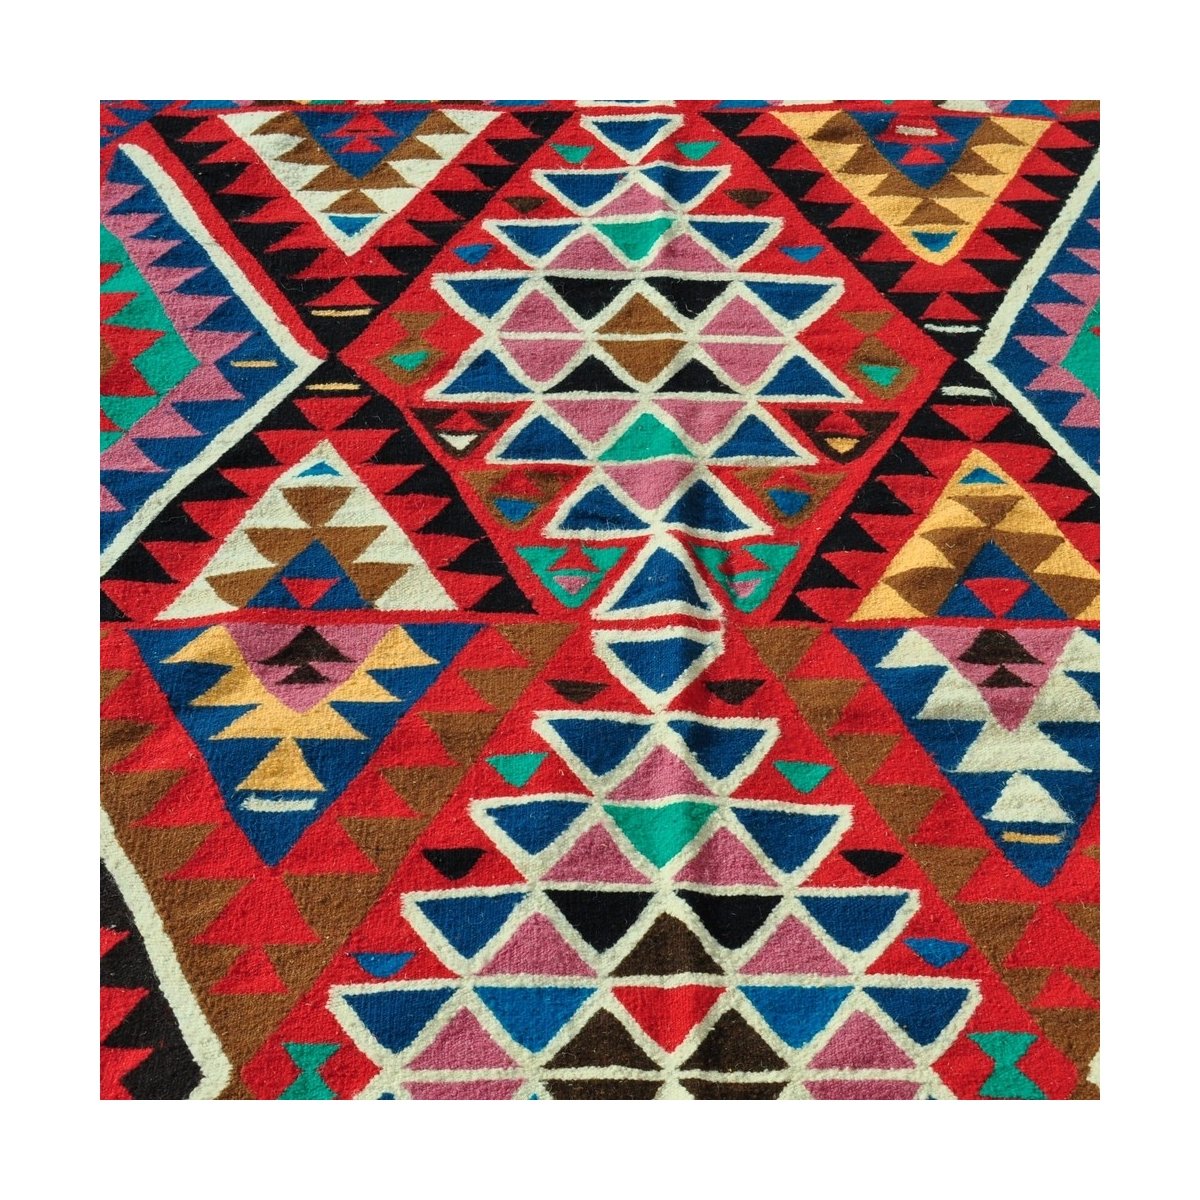 Berber tapijt Groot Tapijt Kilim Sahar 150x250 Veelkleurig (Handgeweven, Wol, Tunesië) Tunesisch kilimdeken, Marokkaanse stijl. 